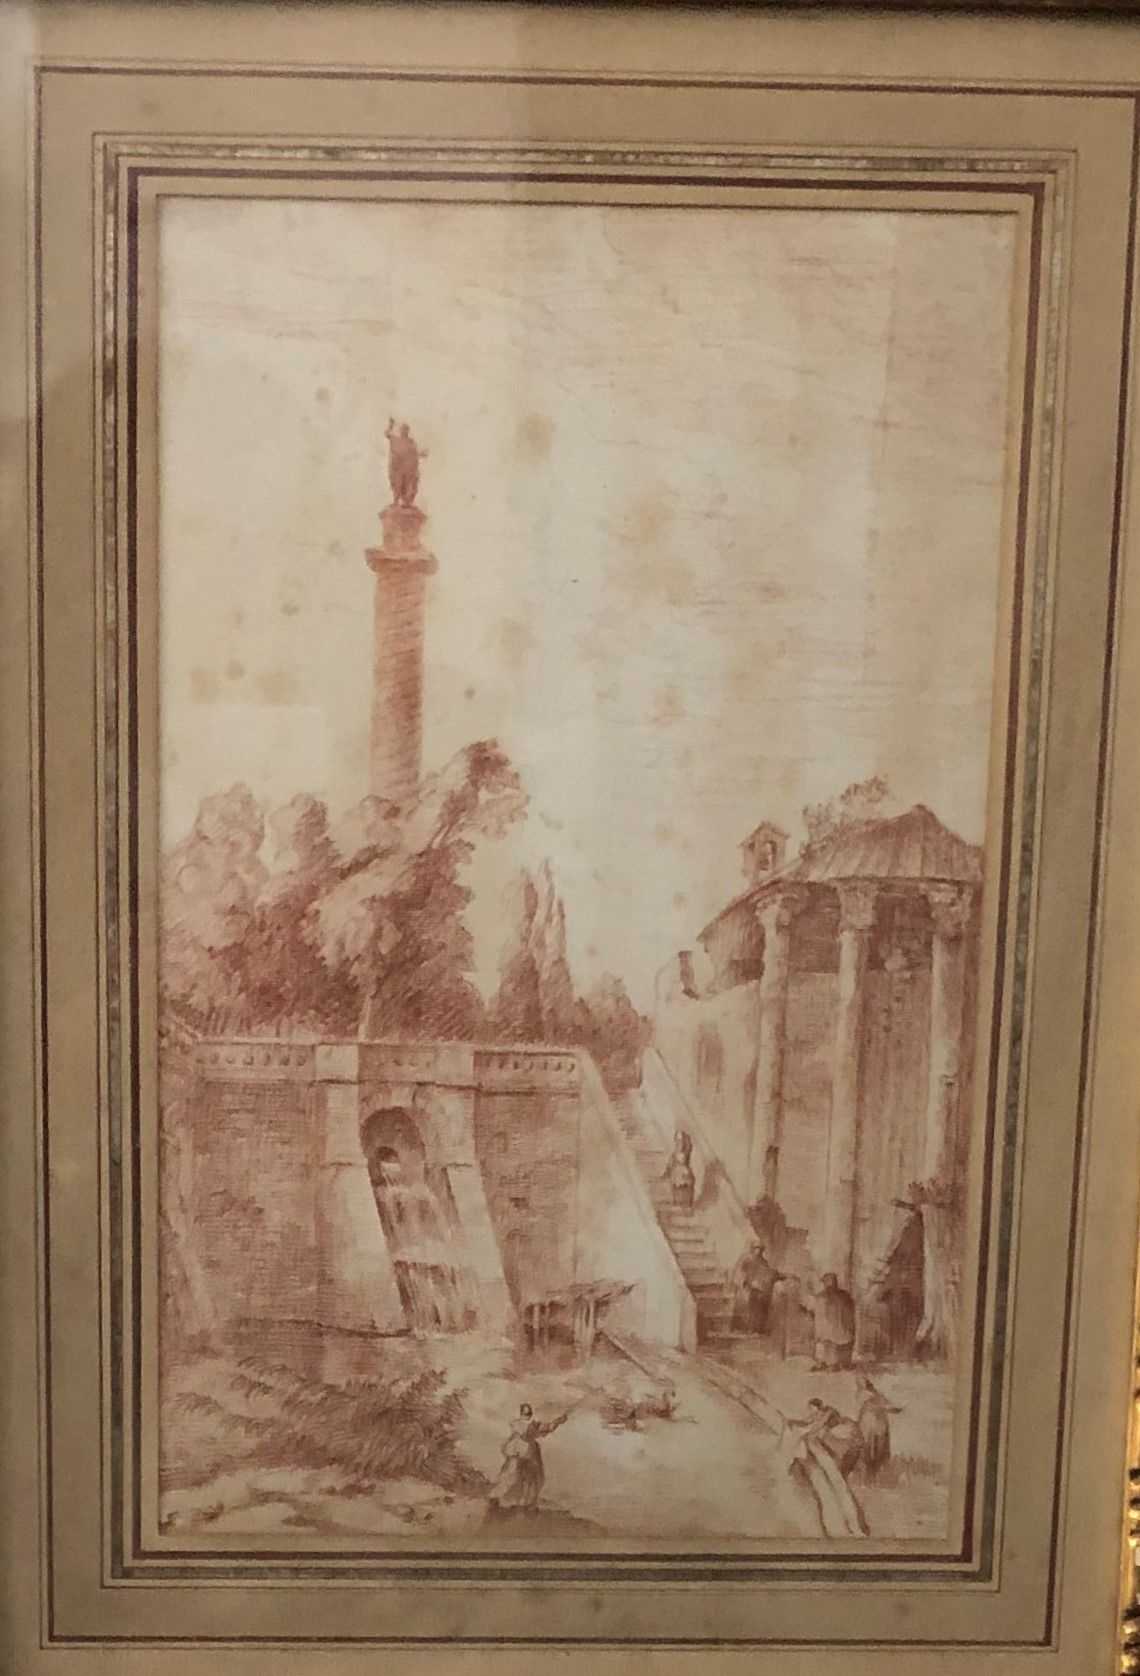 Null 1800年左右的法国或意大利学校。

围绕着盆和柱子的生活场景......天鹅绒上的桑戈尔图案

37 x 24 厘米

在一个镀金的框架下。

点蚀